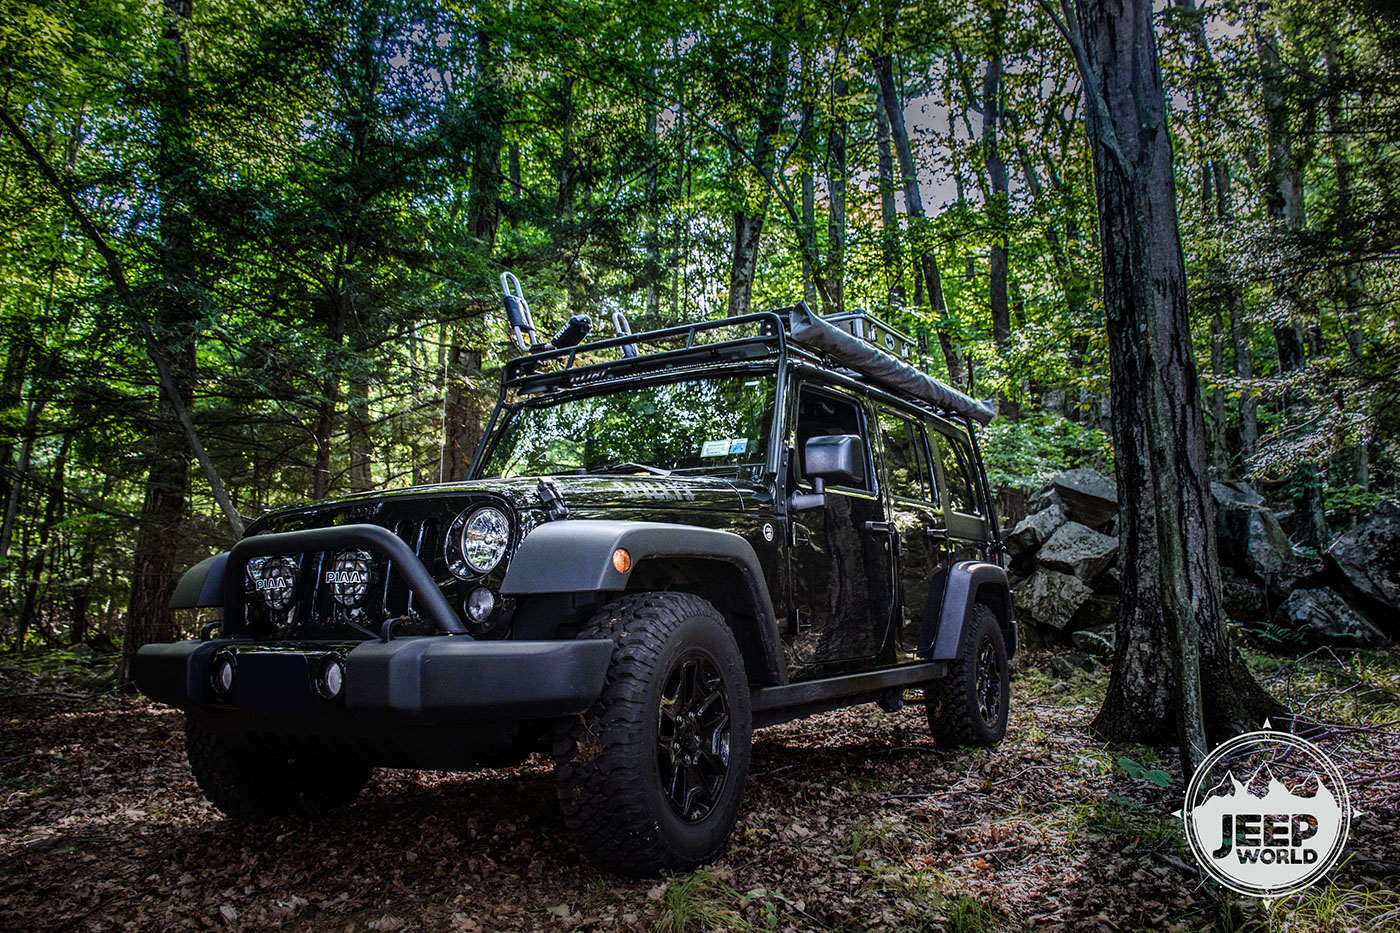 jeep jeep wrangler Jeeps jeepworld.com Nature adventure camping active lifestyle Automotive Photography mopar